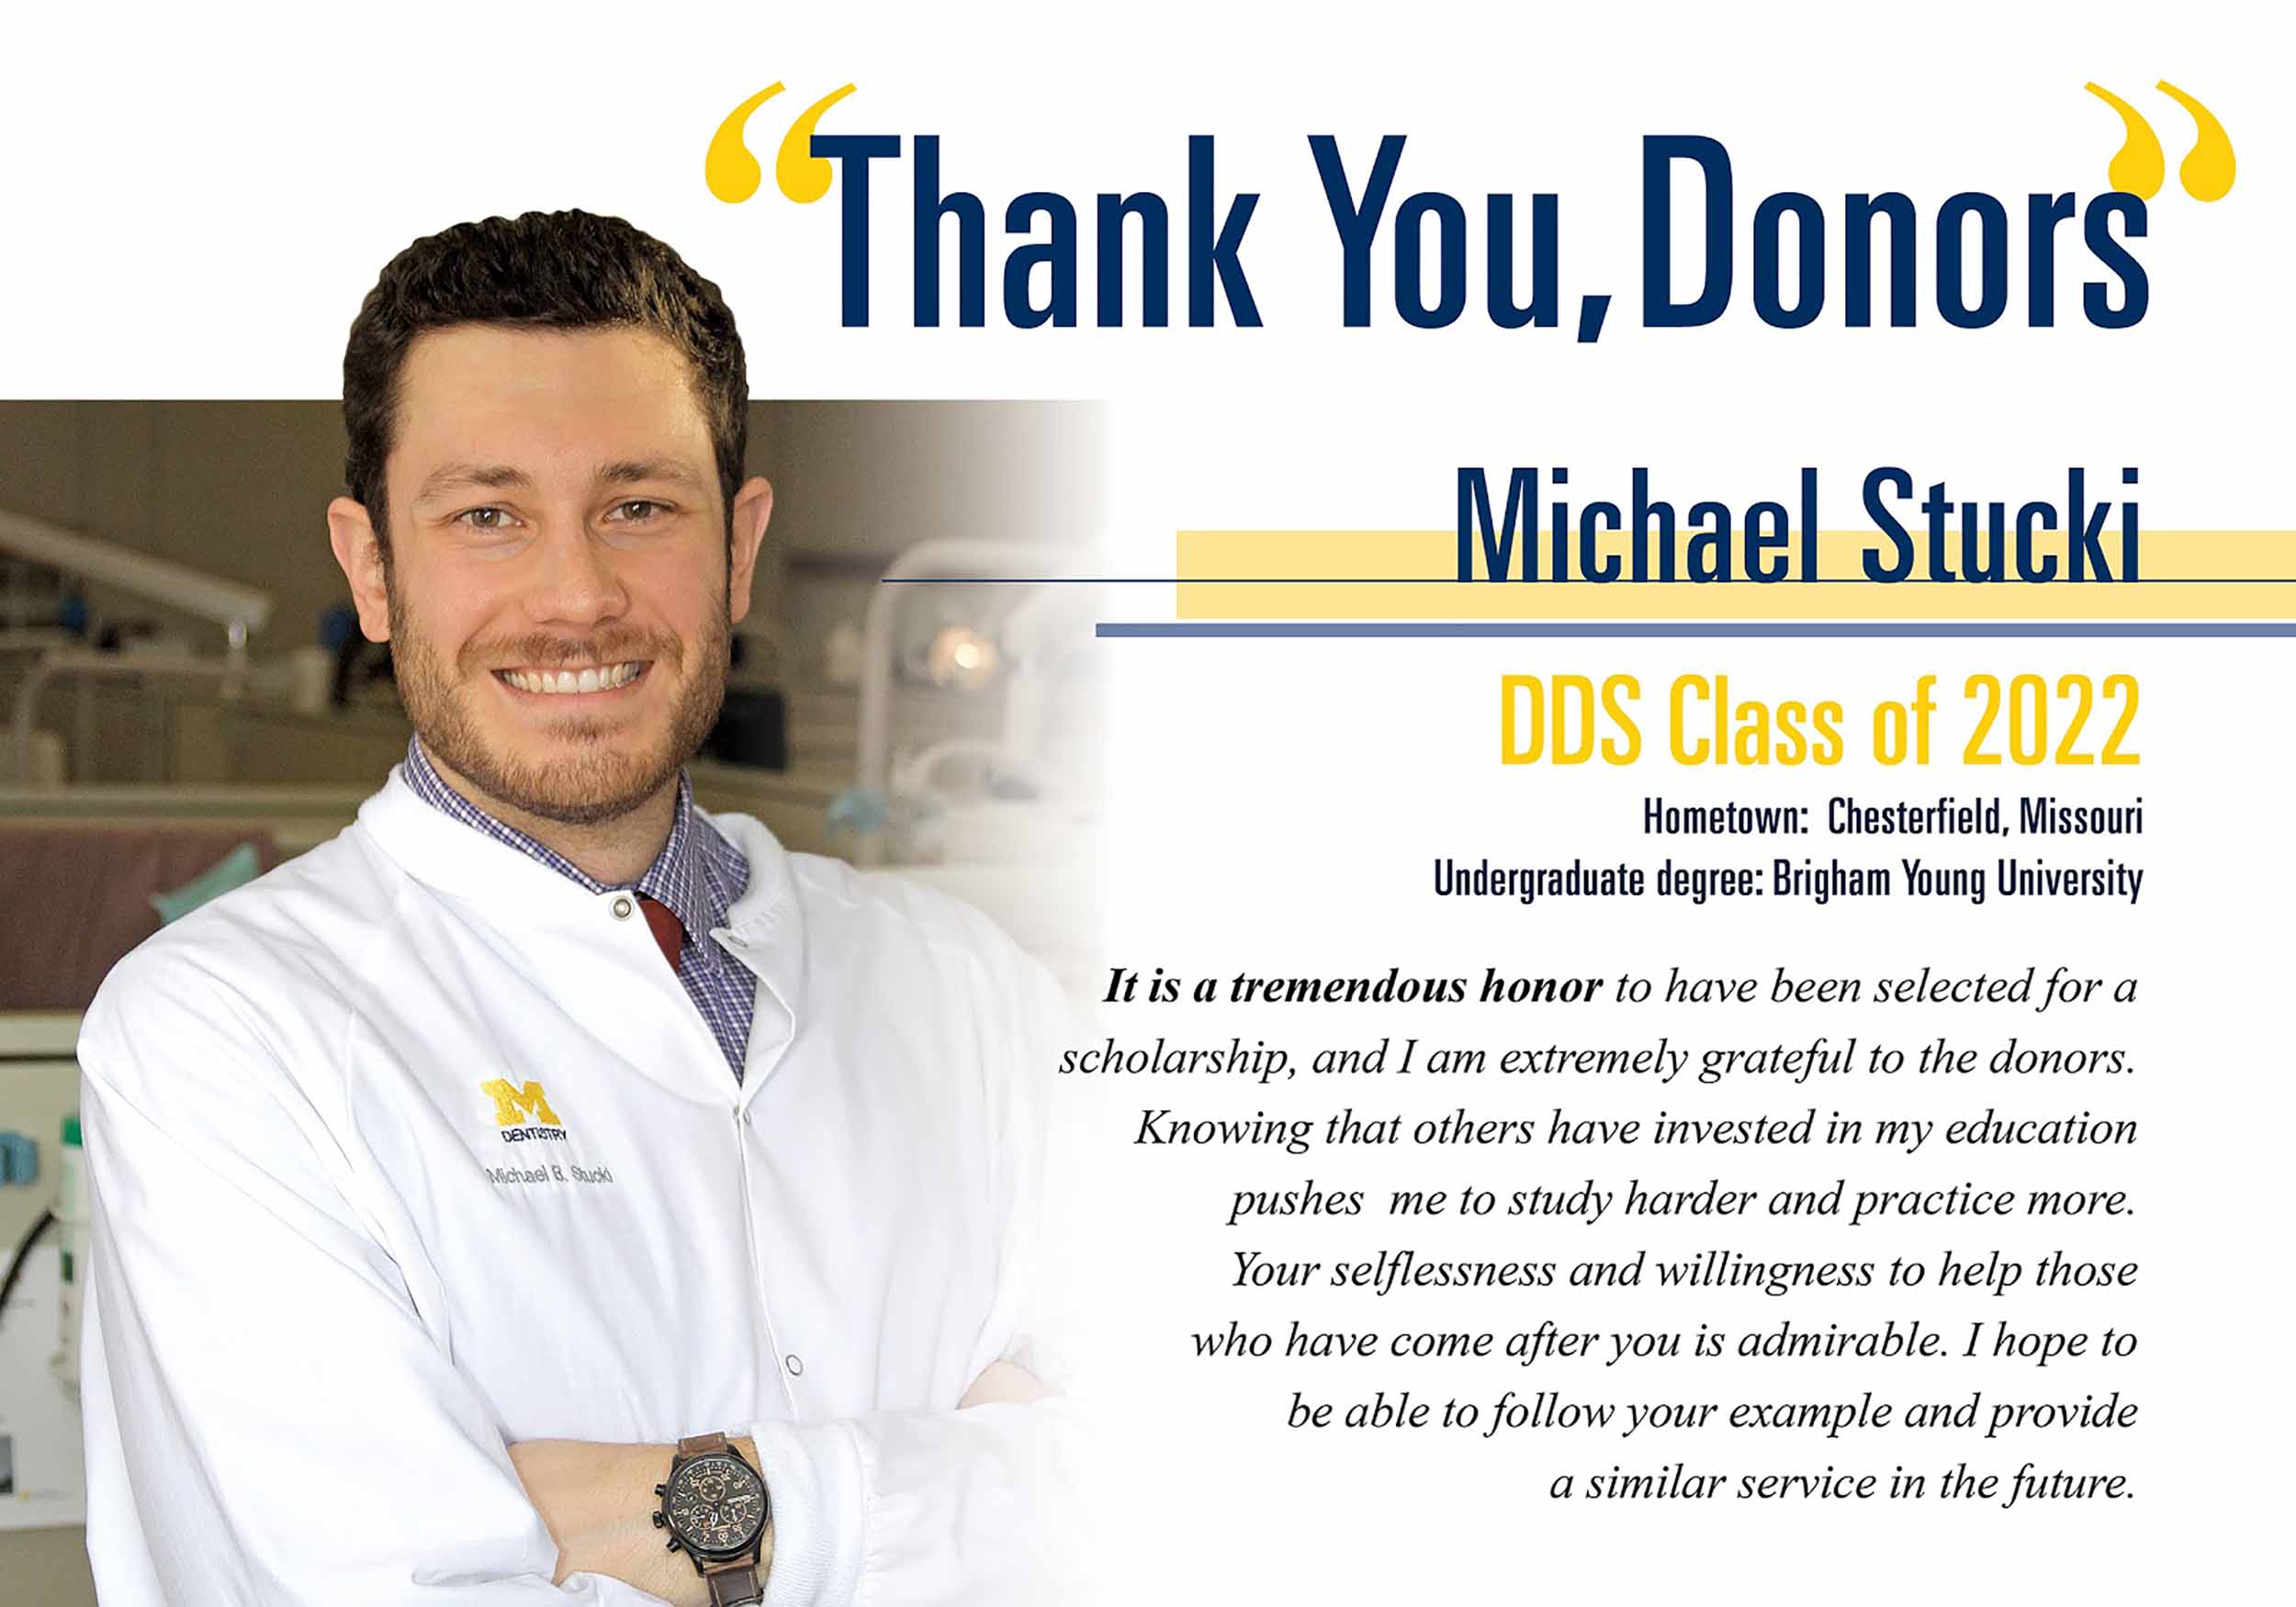 michael stucki thanking donors